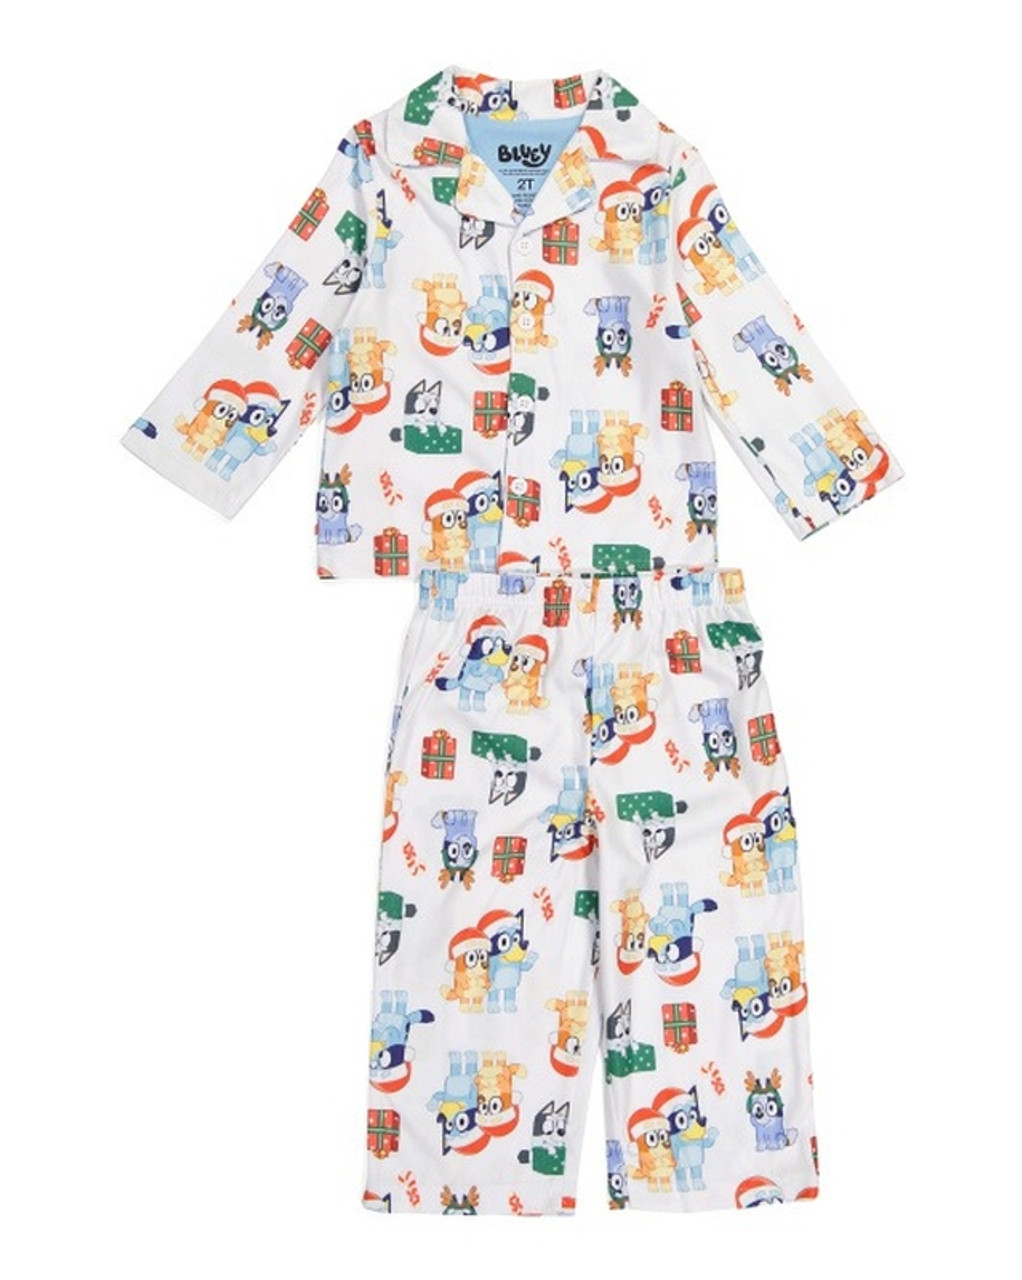 Bluey Exclusive Toddler Cotton Pajama Set, 4-Piece, Sizes 2T-5T